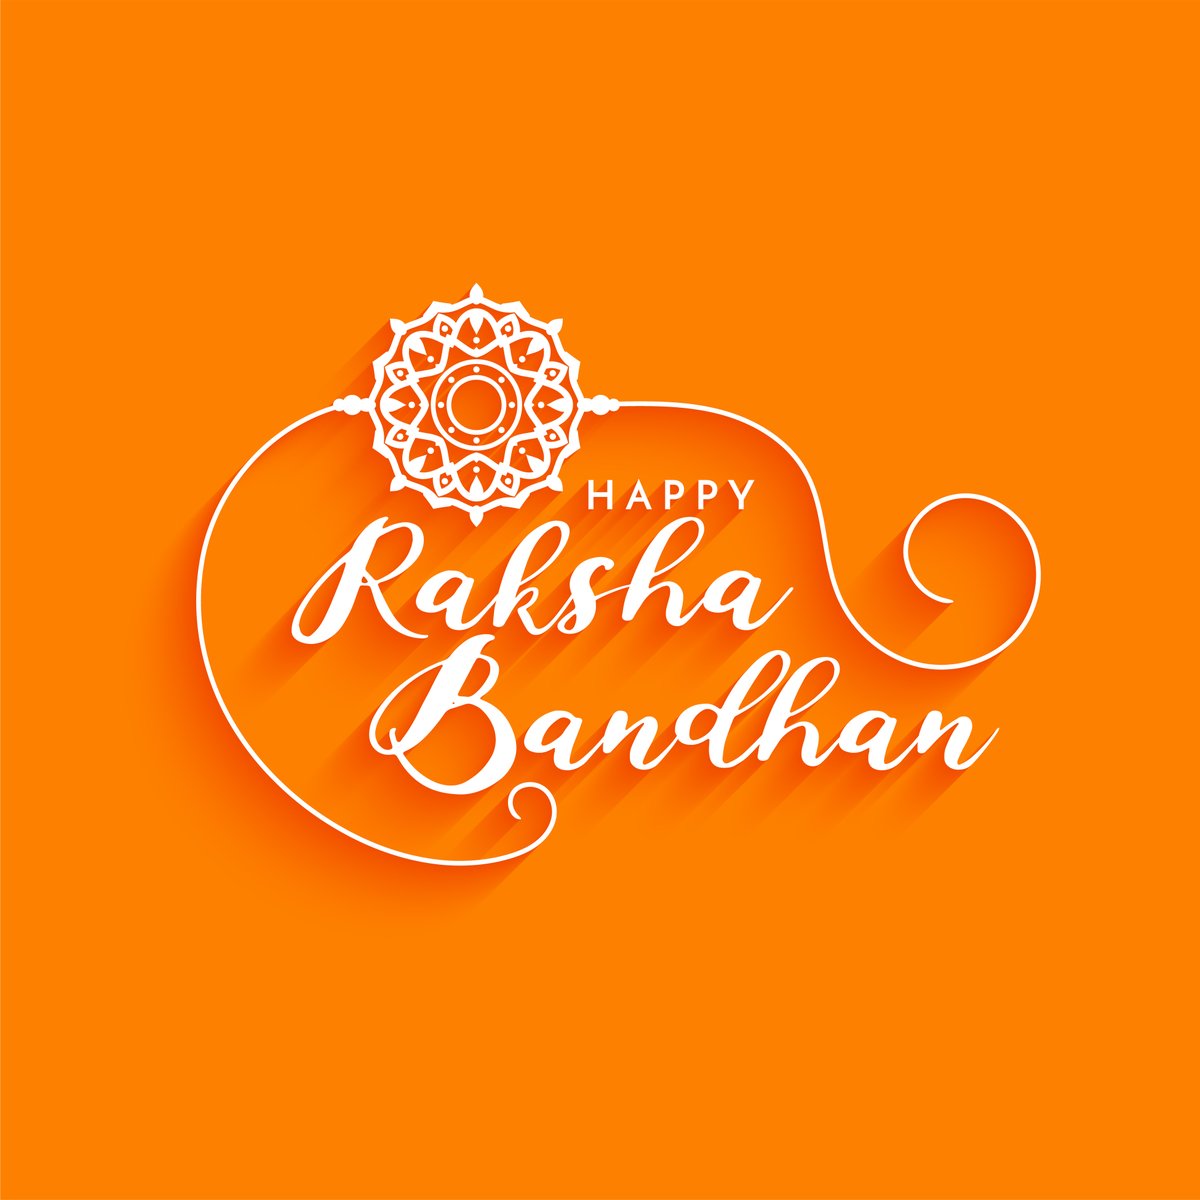 Wish you a joyous Raksha Bandhan!

#HappyRakshaBandhan2023 #codeholic